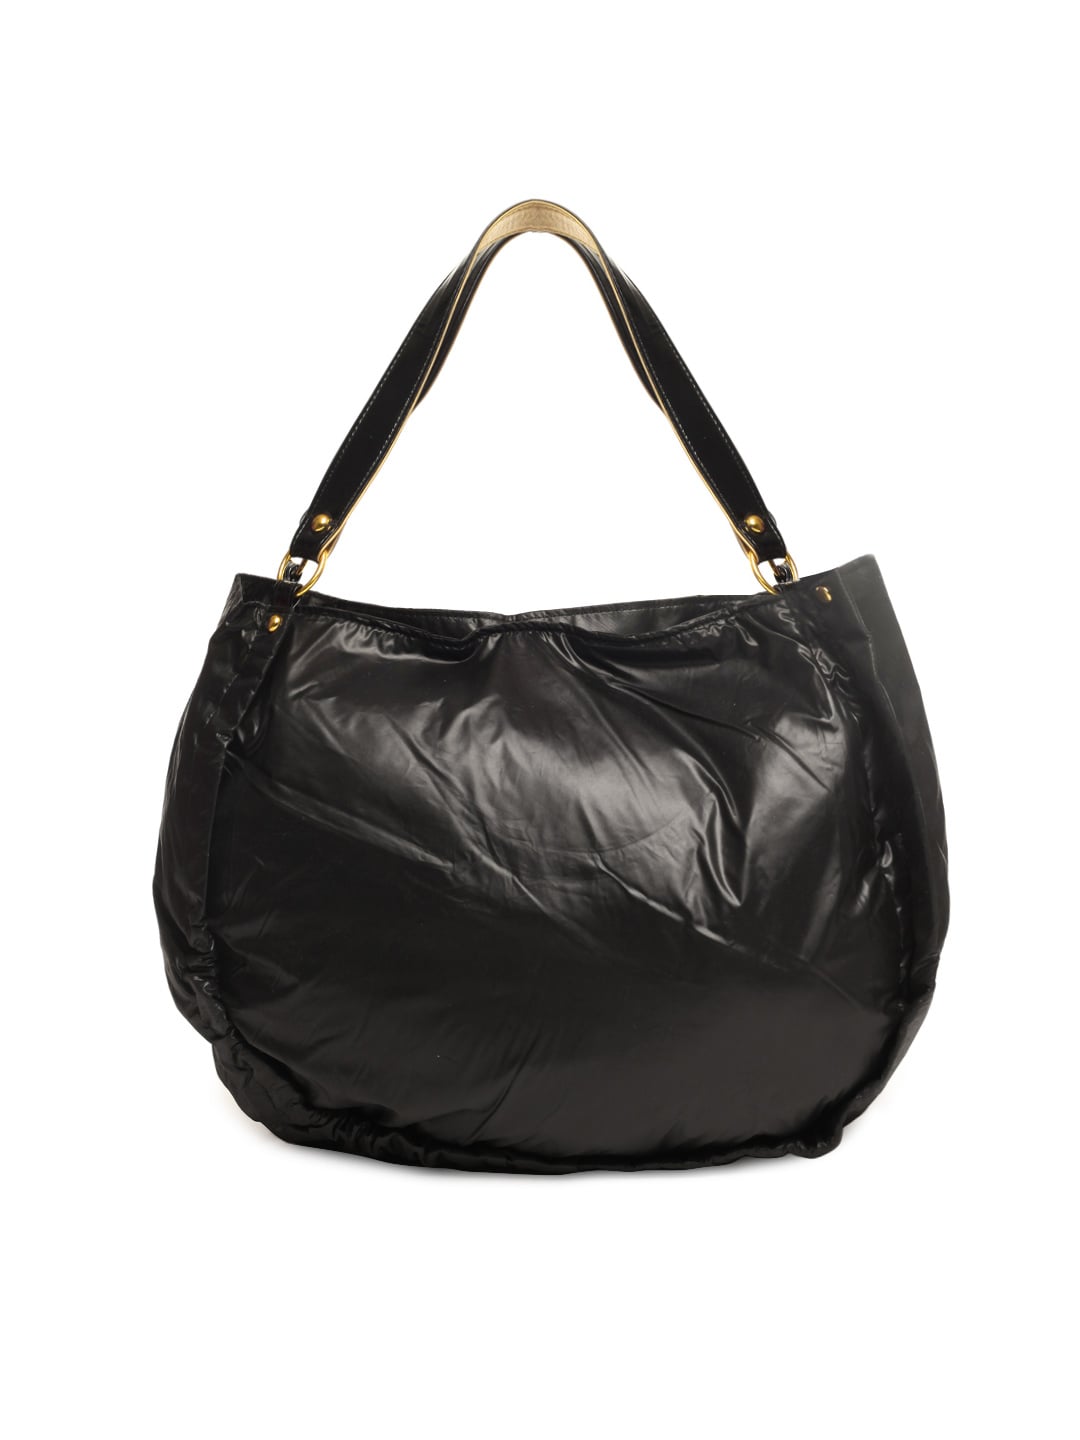 Allen Solly Women Black Handbag